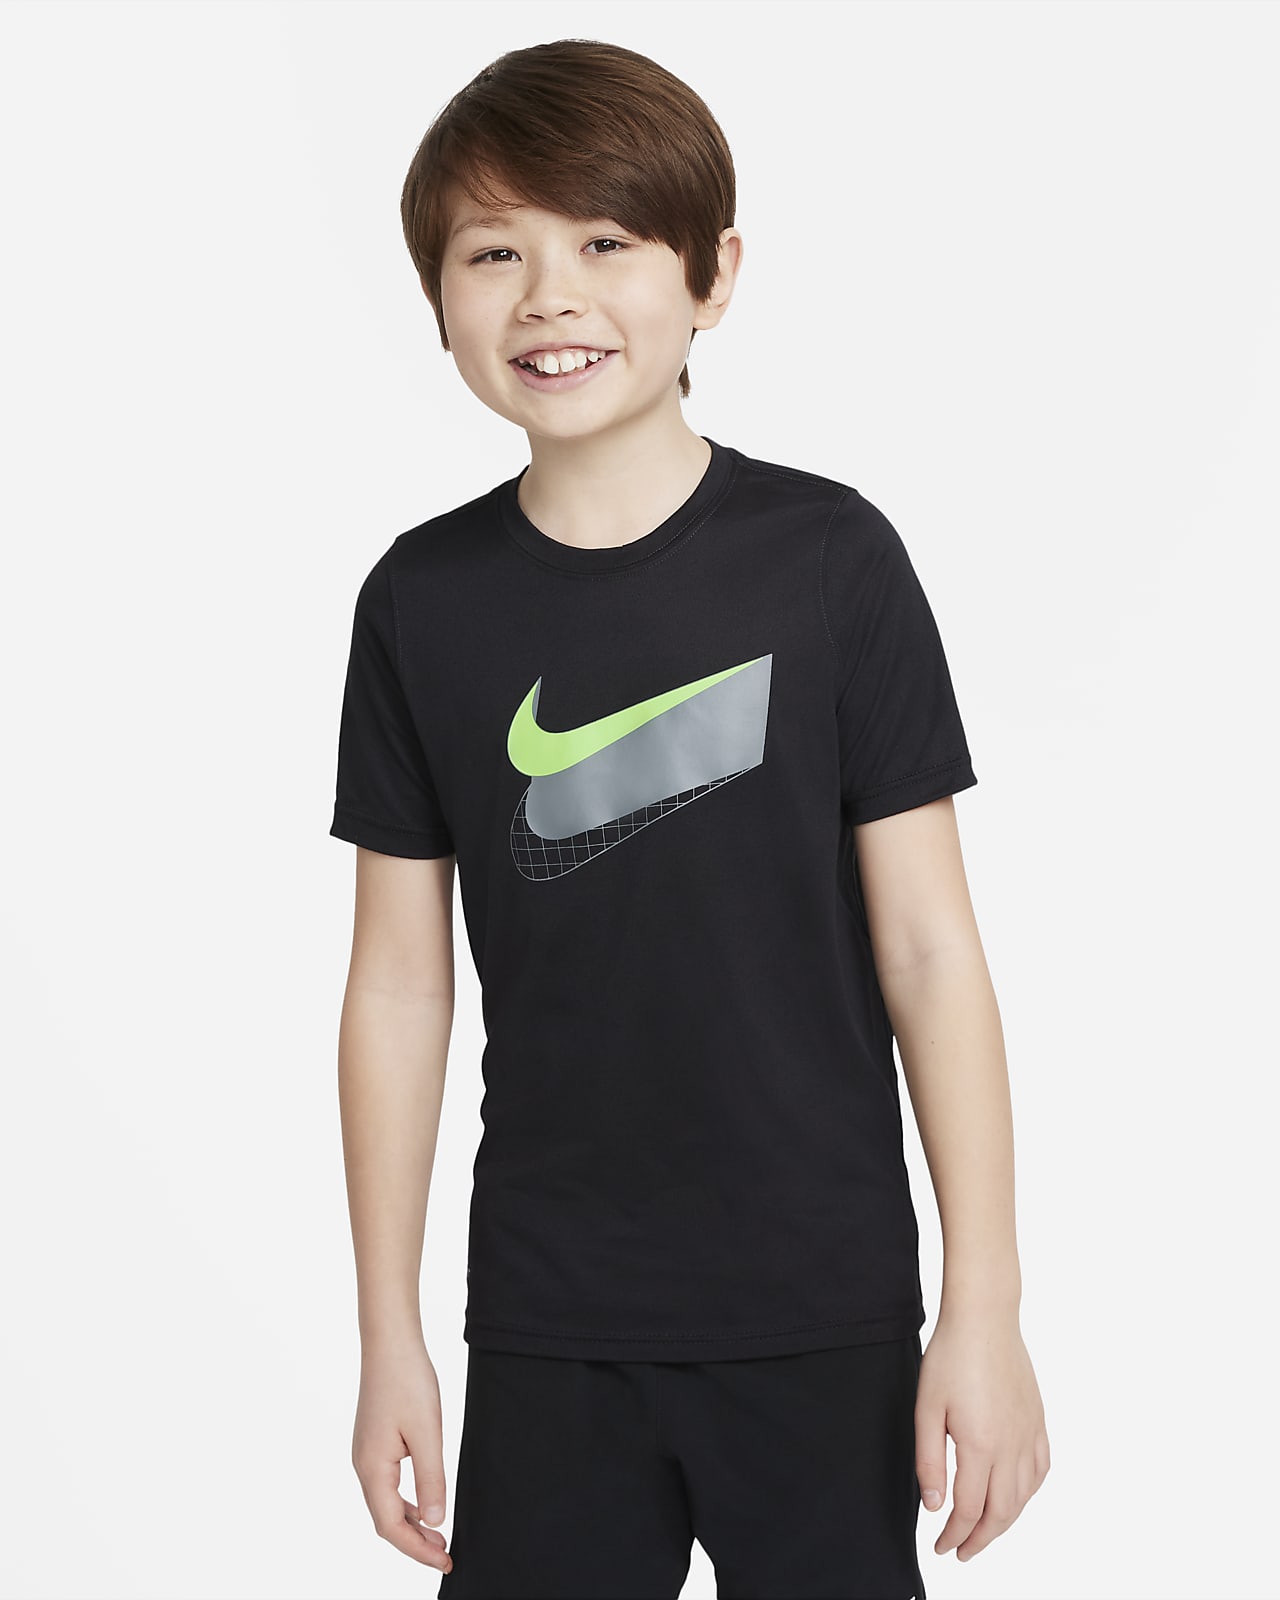 købmand Ligegyldighed Donau Nike Dri-FIT Big Kids' (Boys') Training T-Shirt. Nike.com